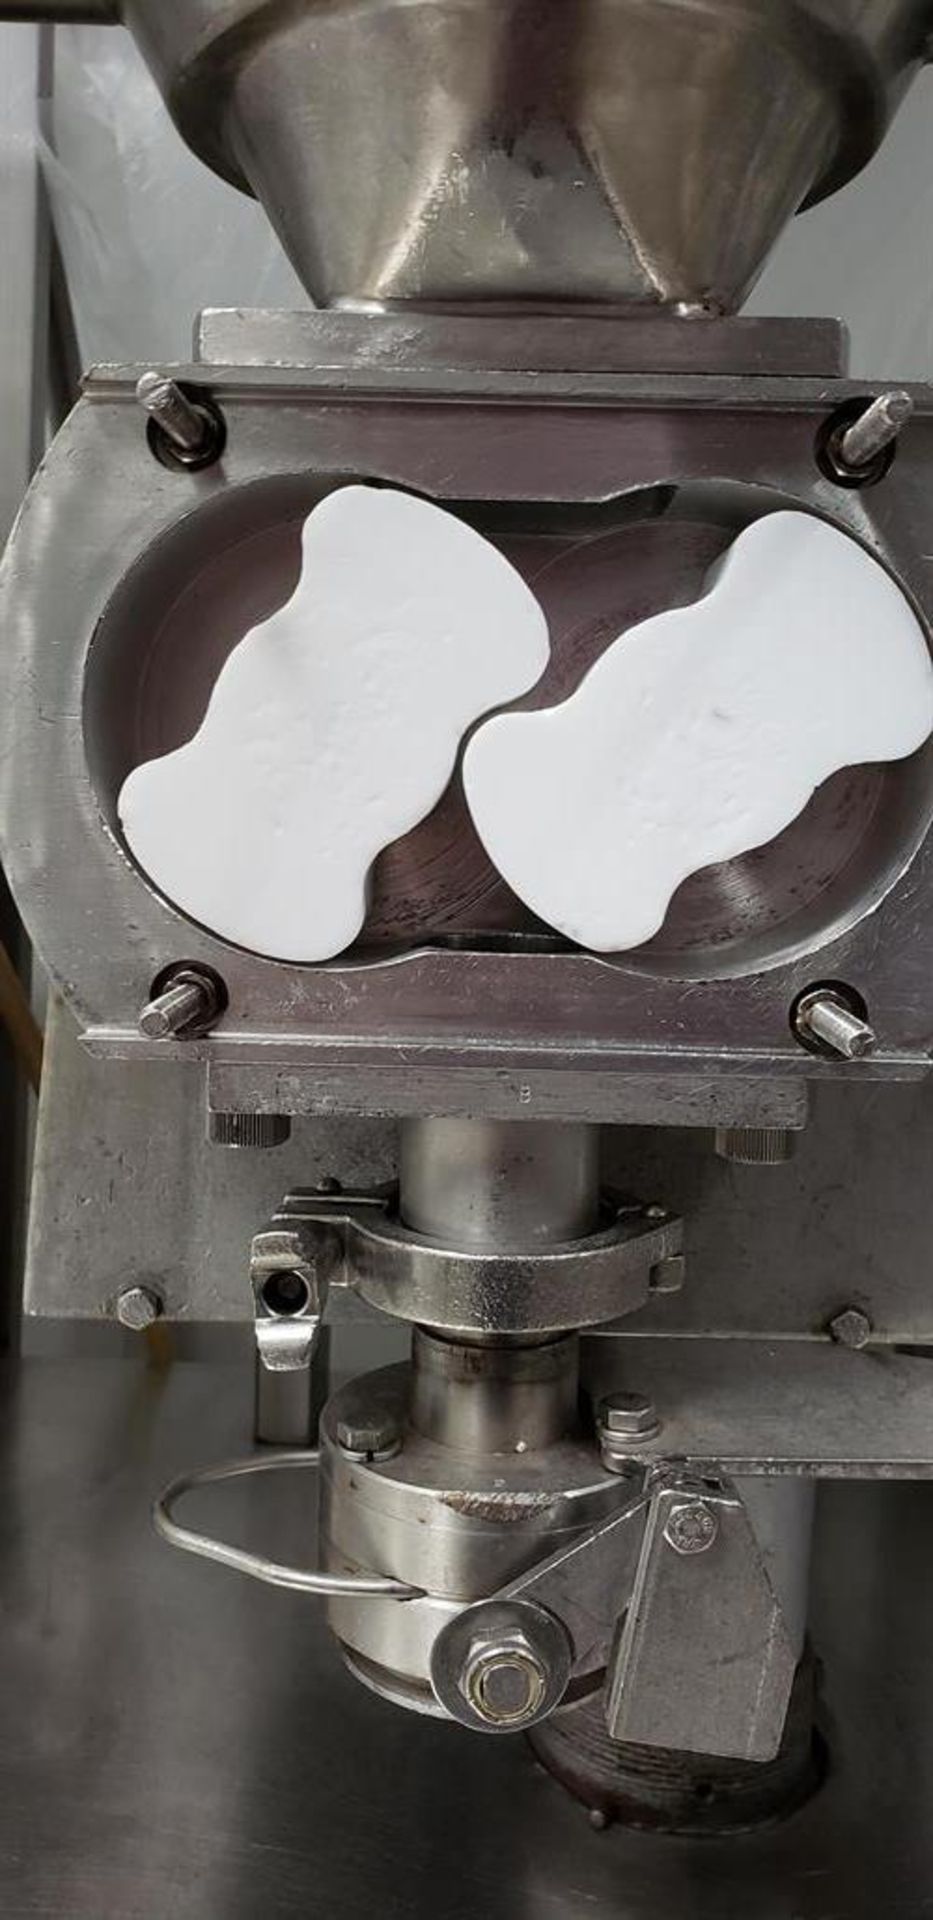 Mateer Burt Lobe Style Fudge Filler - Used for fudge trays - Model 50S - Heated hot water hopper - - Image 2 of 3